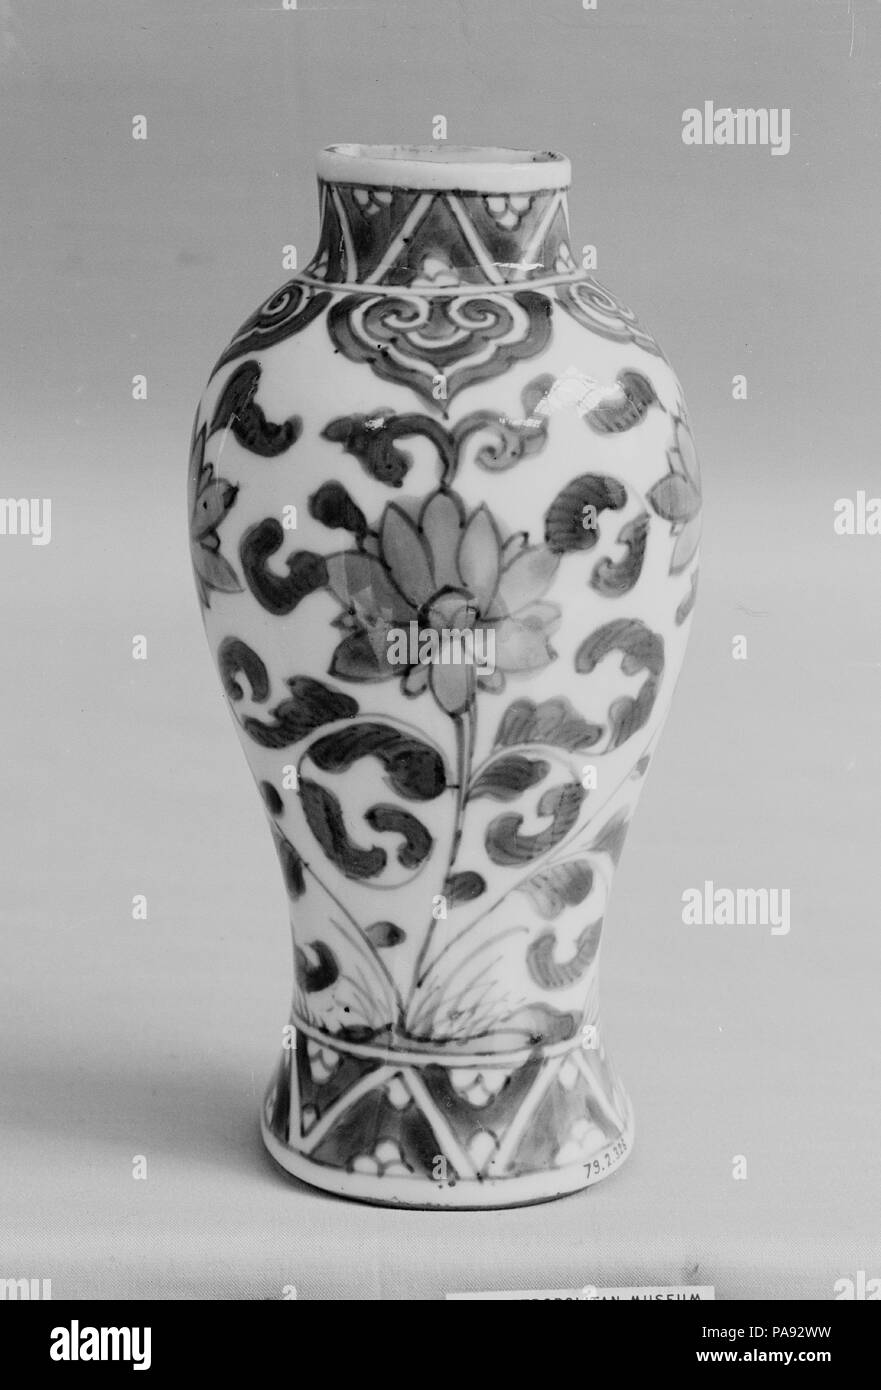 Hanging Vase. Culture: Japan. Dimensions: H. 5 1/2 in. (14 cm). Date: 19th century. Museum: Metropolitan Museum of Art, New York, USA. Stock Photo